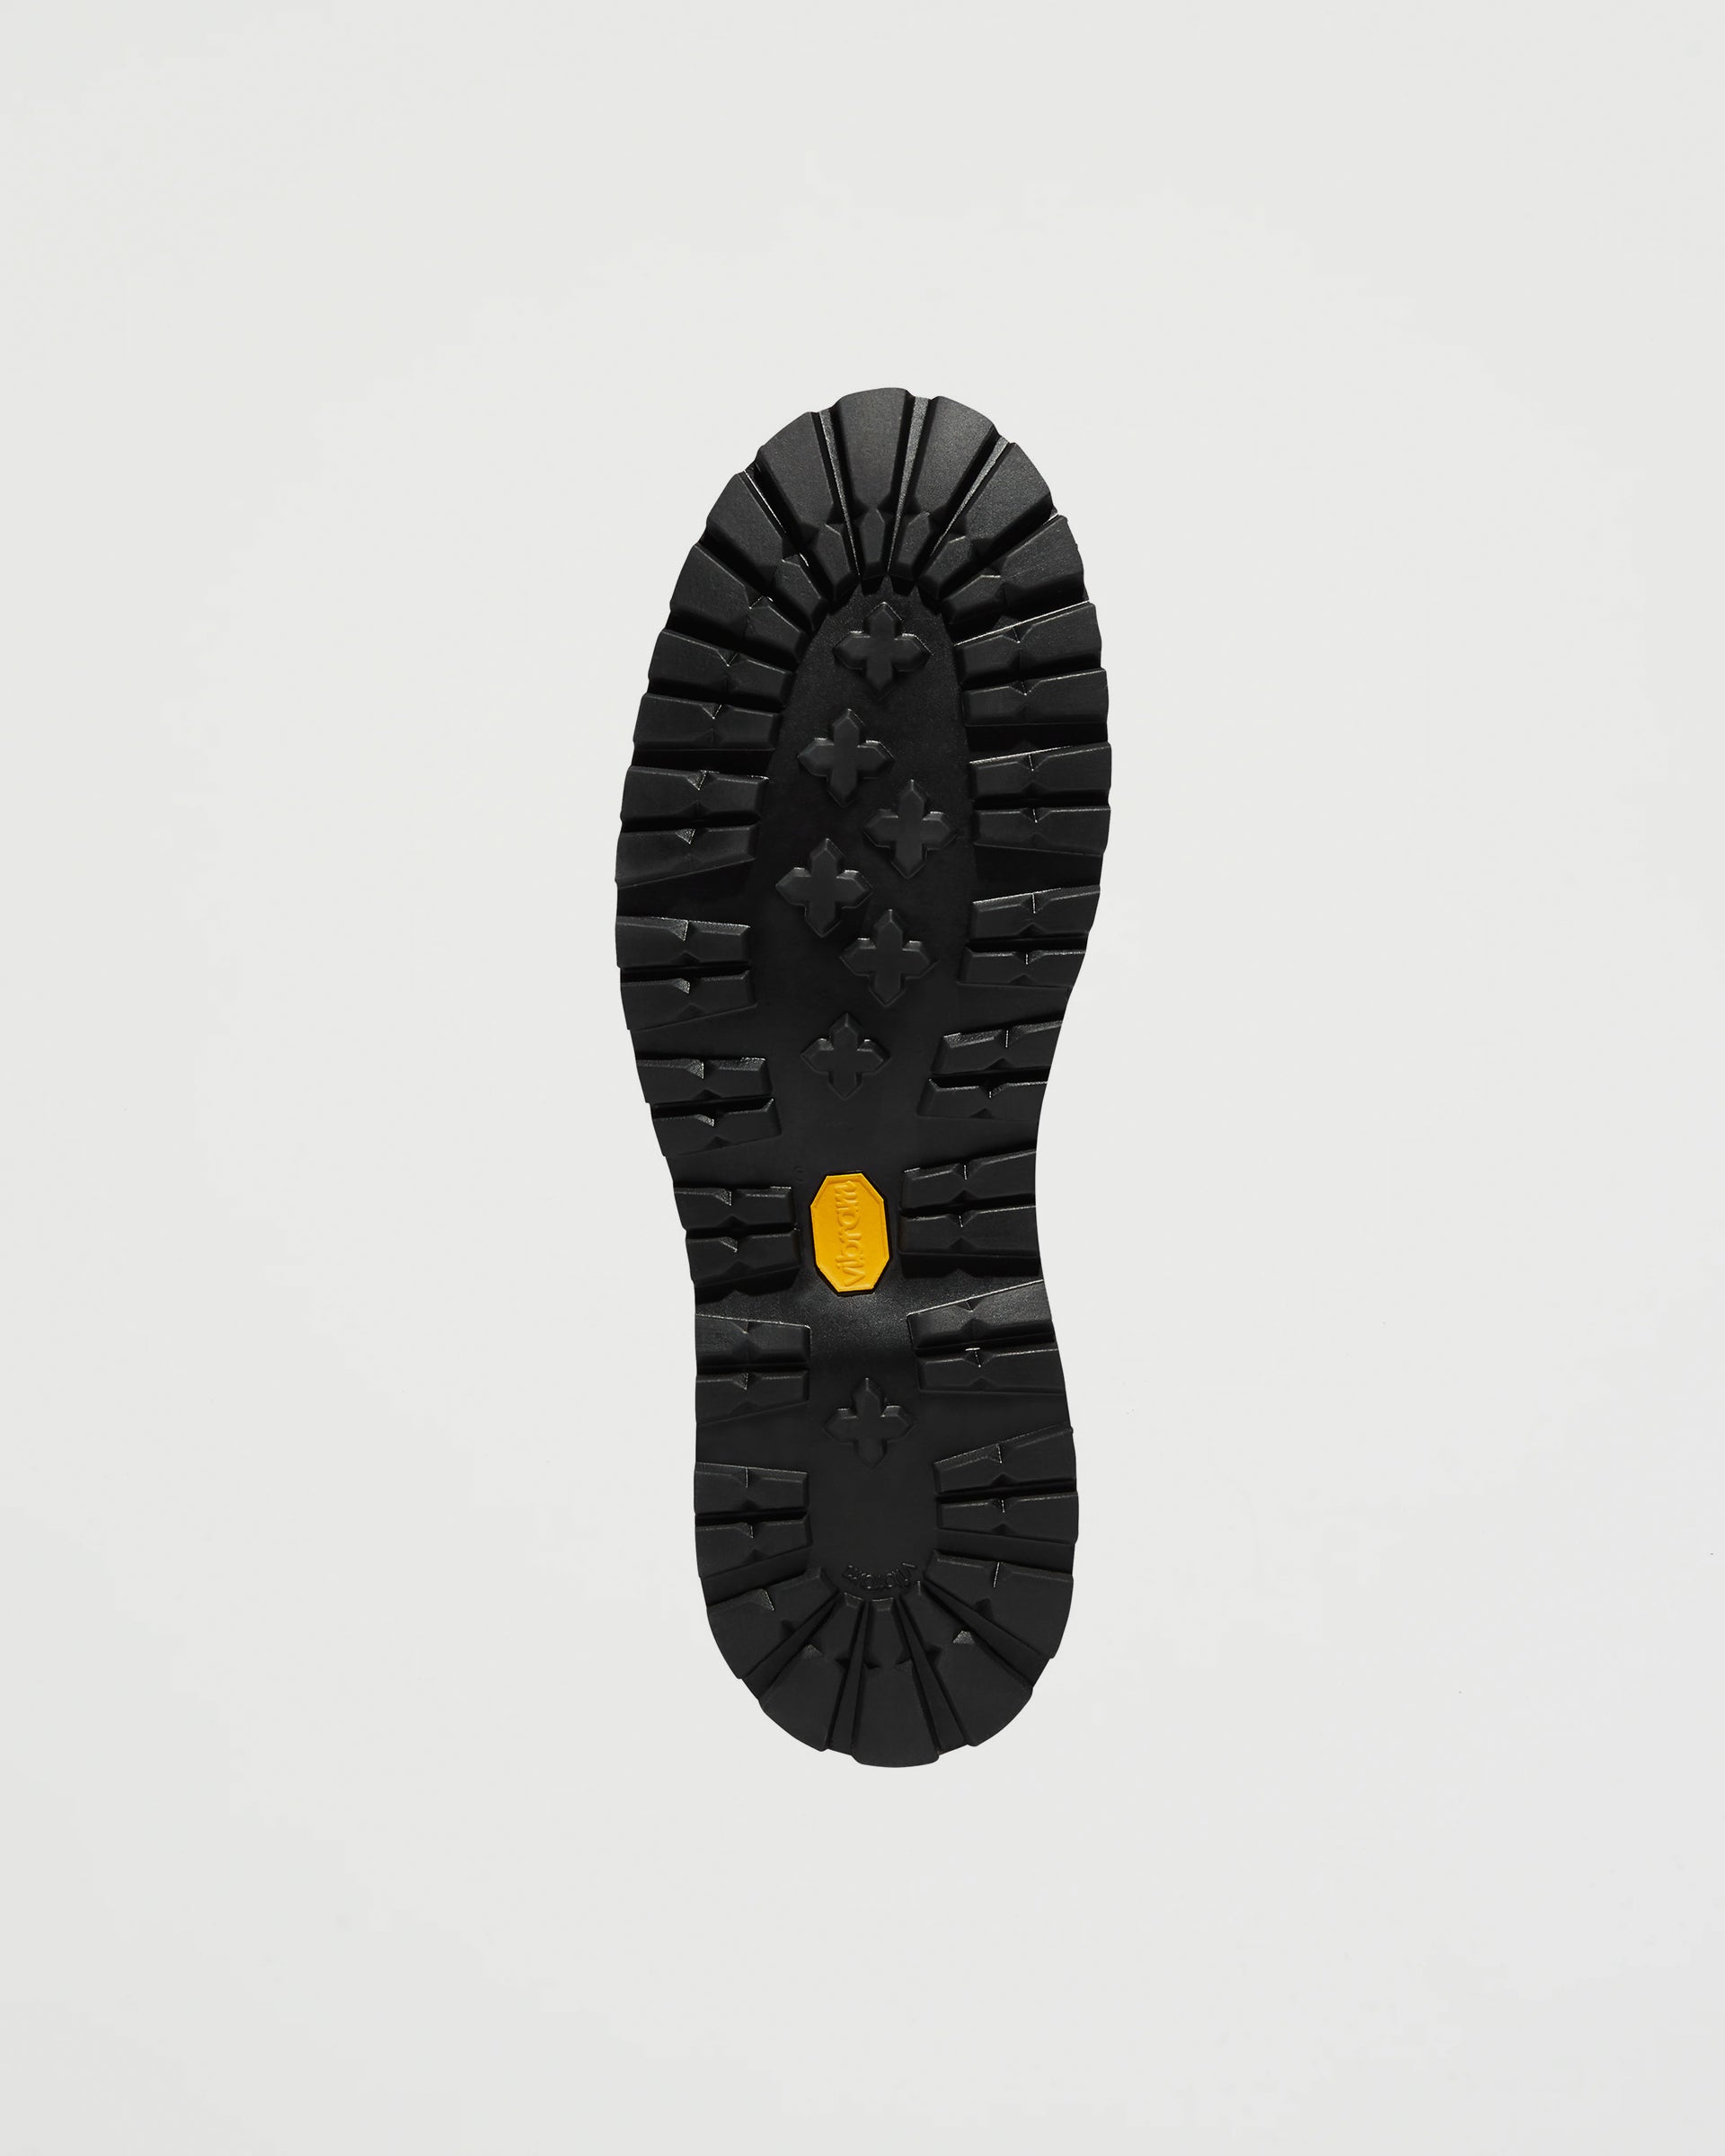 Danner Mountain Light GORE-TEX Black Shoes Leather Men